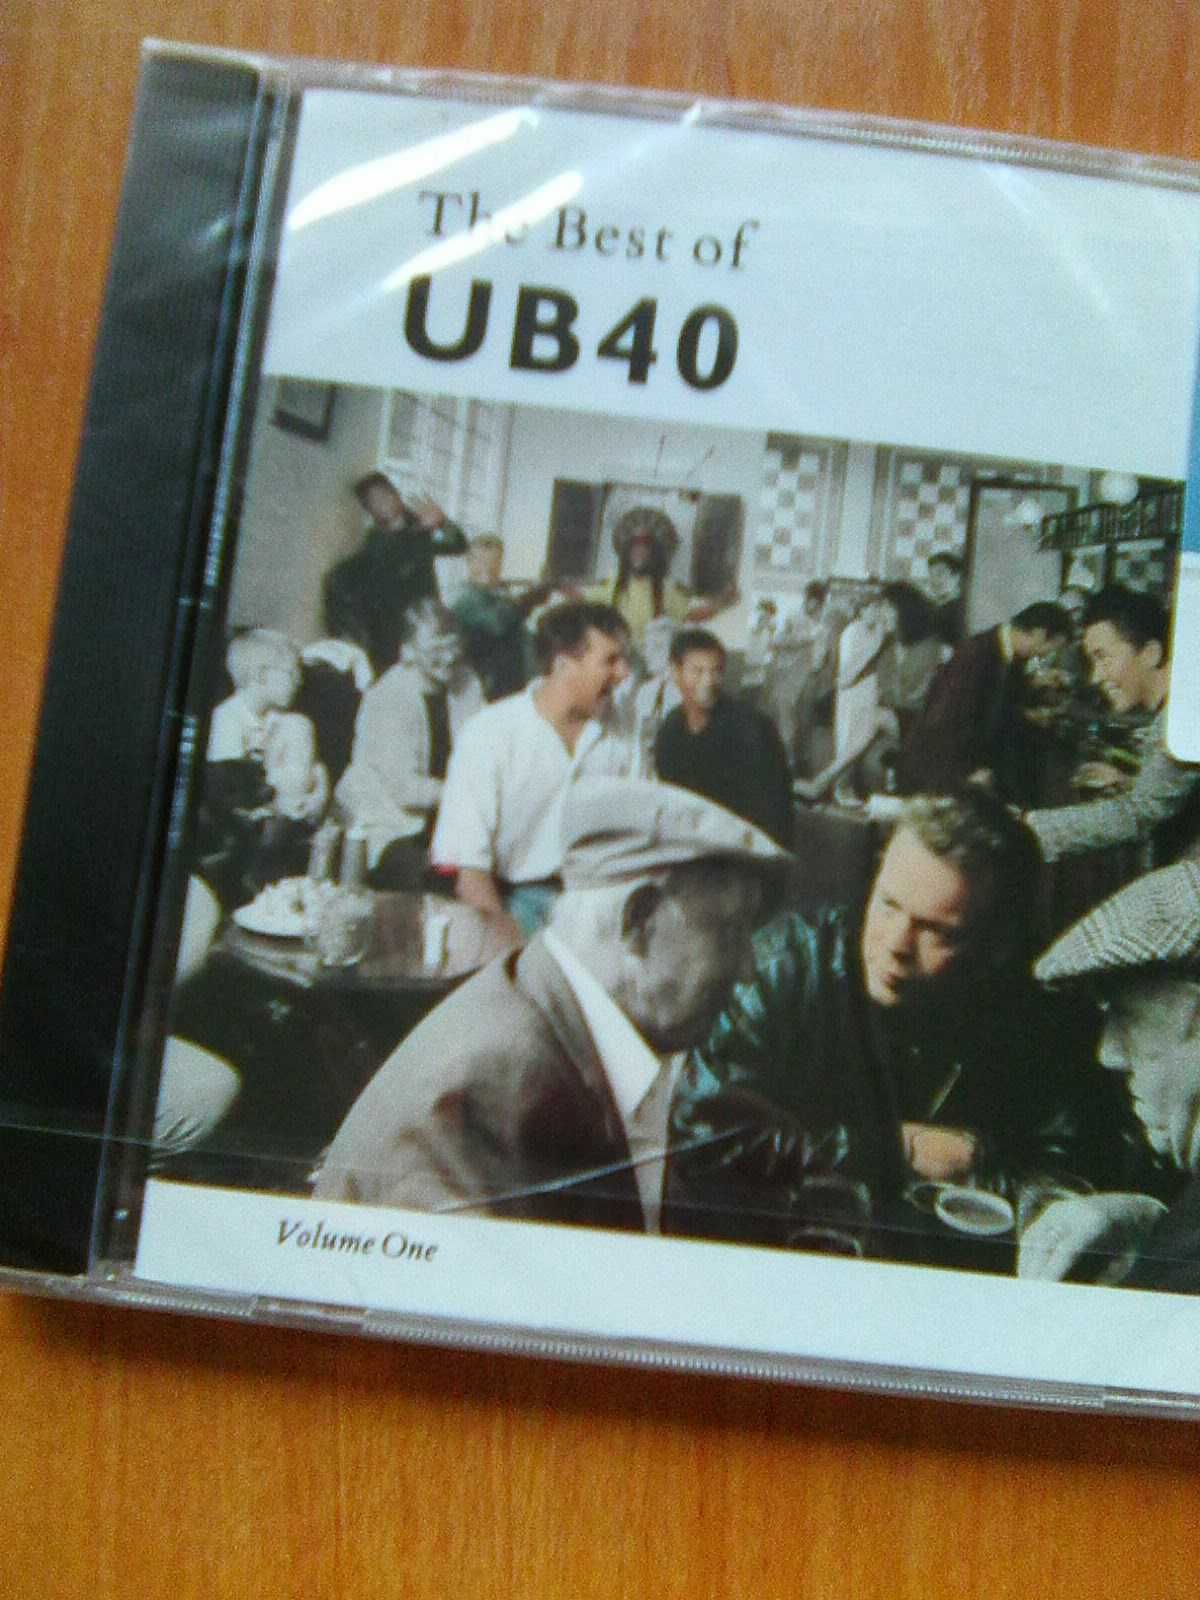 UB 40 – The Best Of UB 40 Volume One